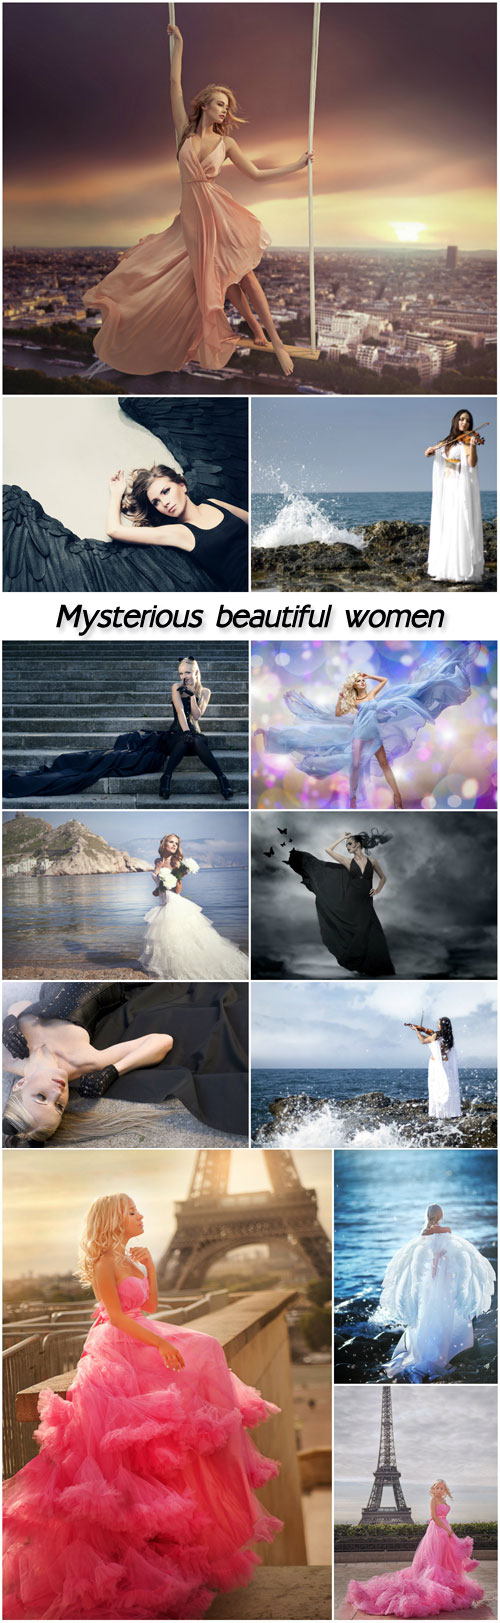 Mysterious beautiful women